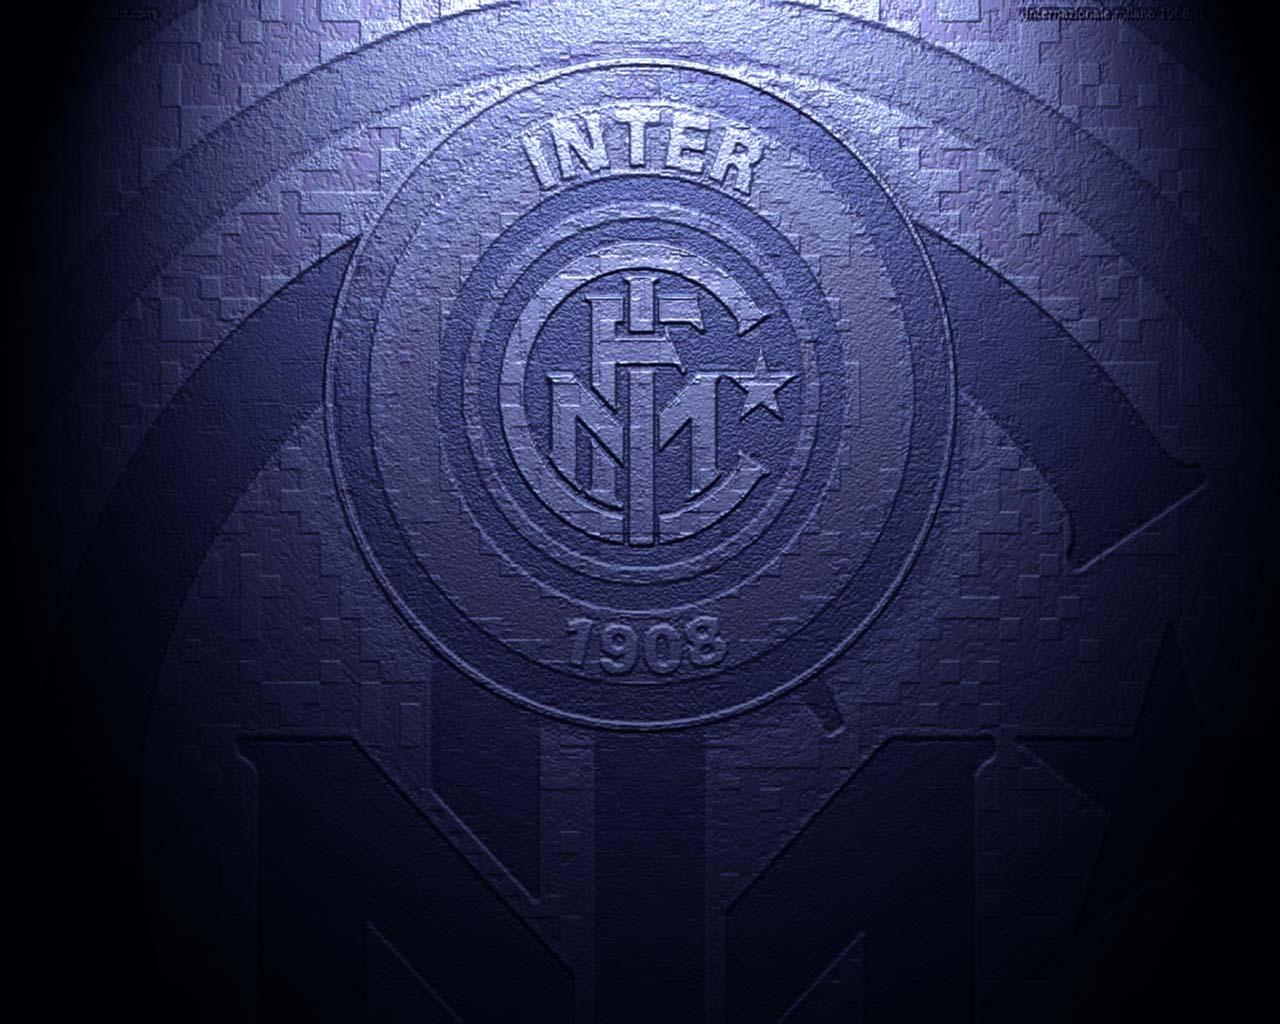 iPhone FC Internazionale Milano Wallpaper. Full HD Picture